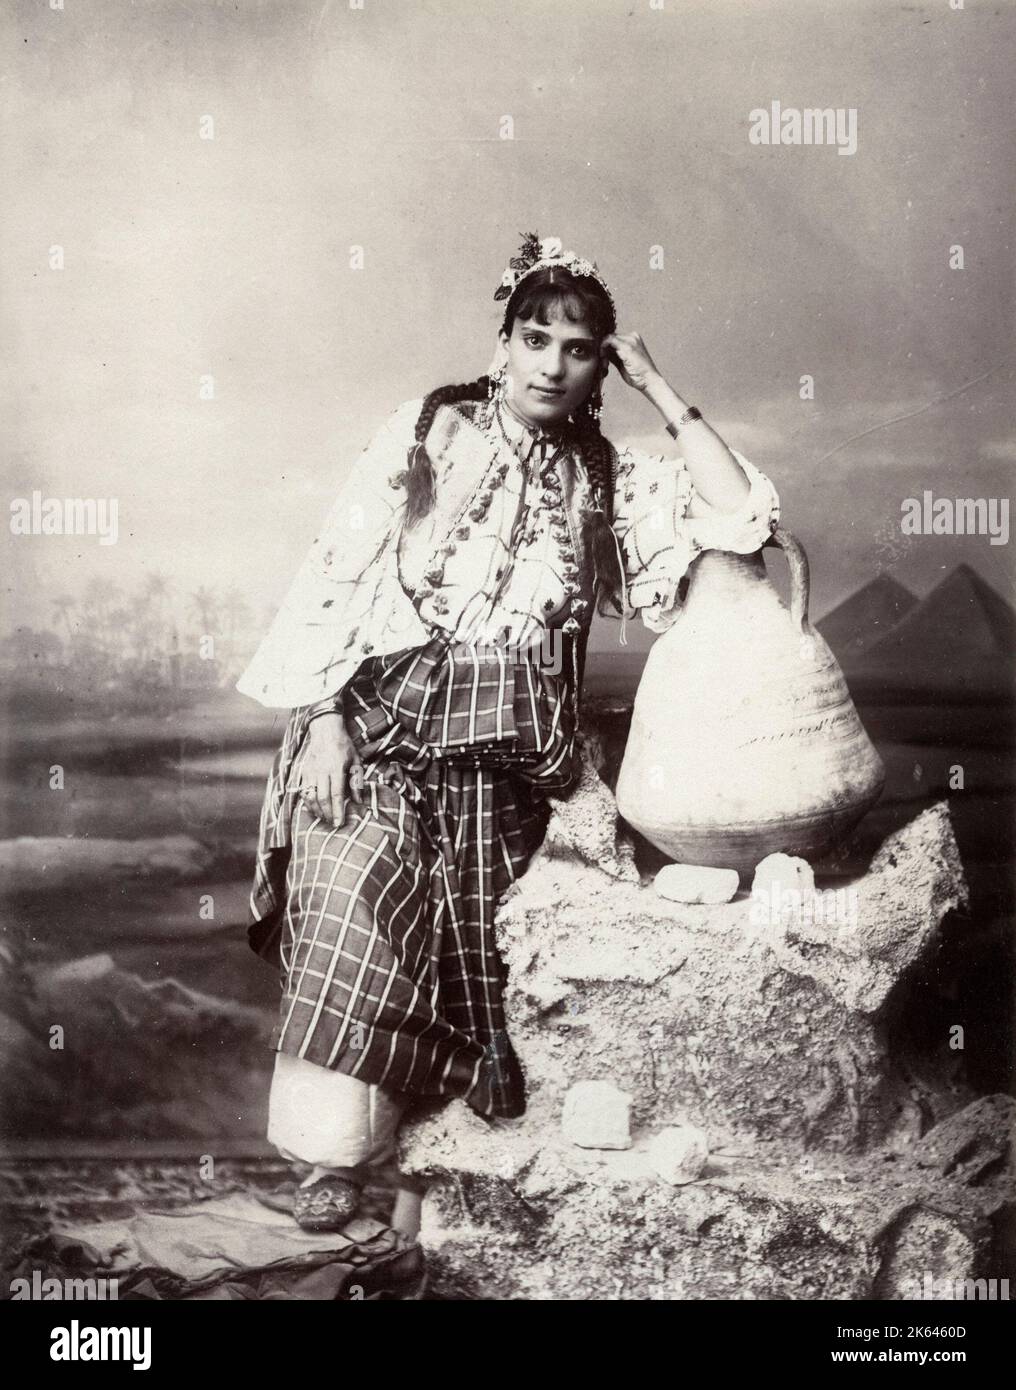 Vintage 19th century photograph - Levante Egyptienne, Levantine woman from Egypt, Zangaki studio. Stock Photo